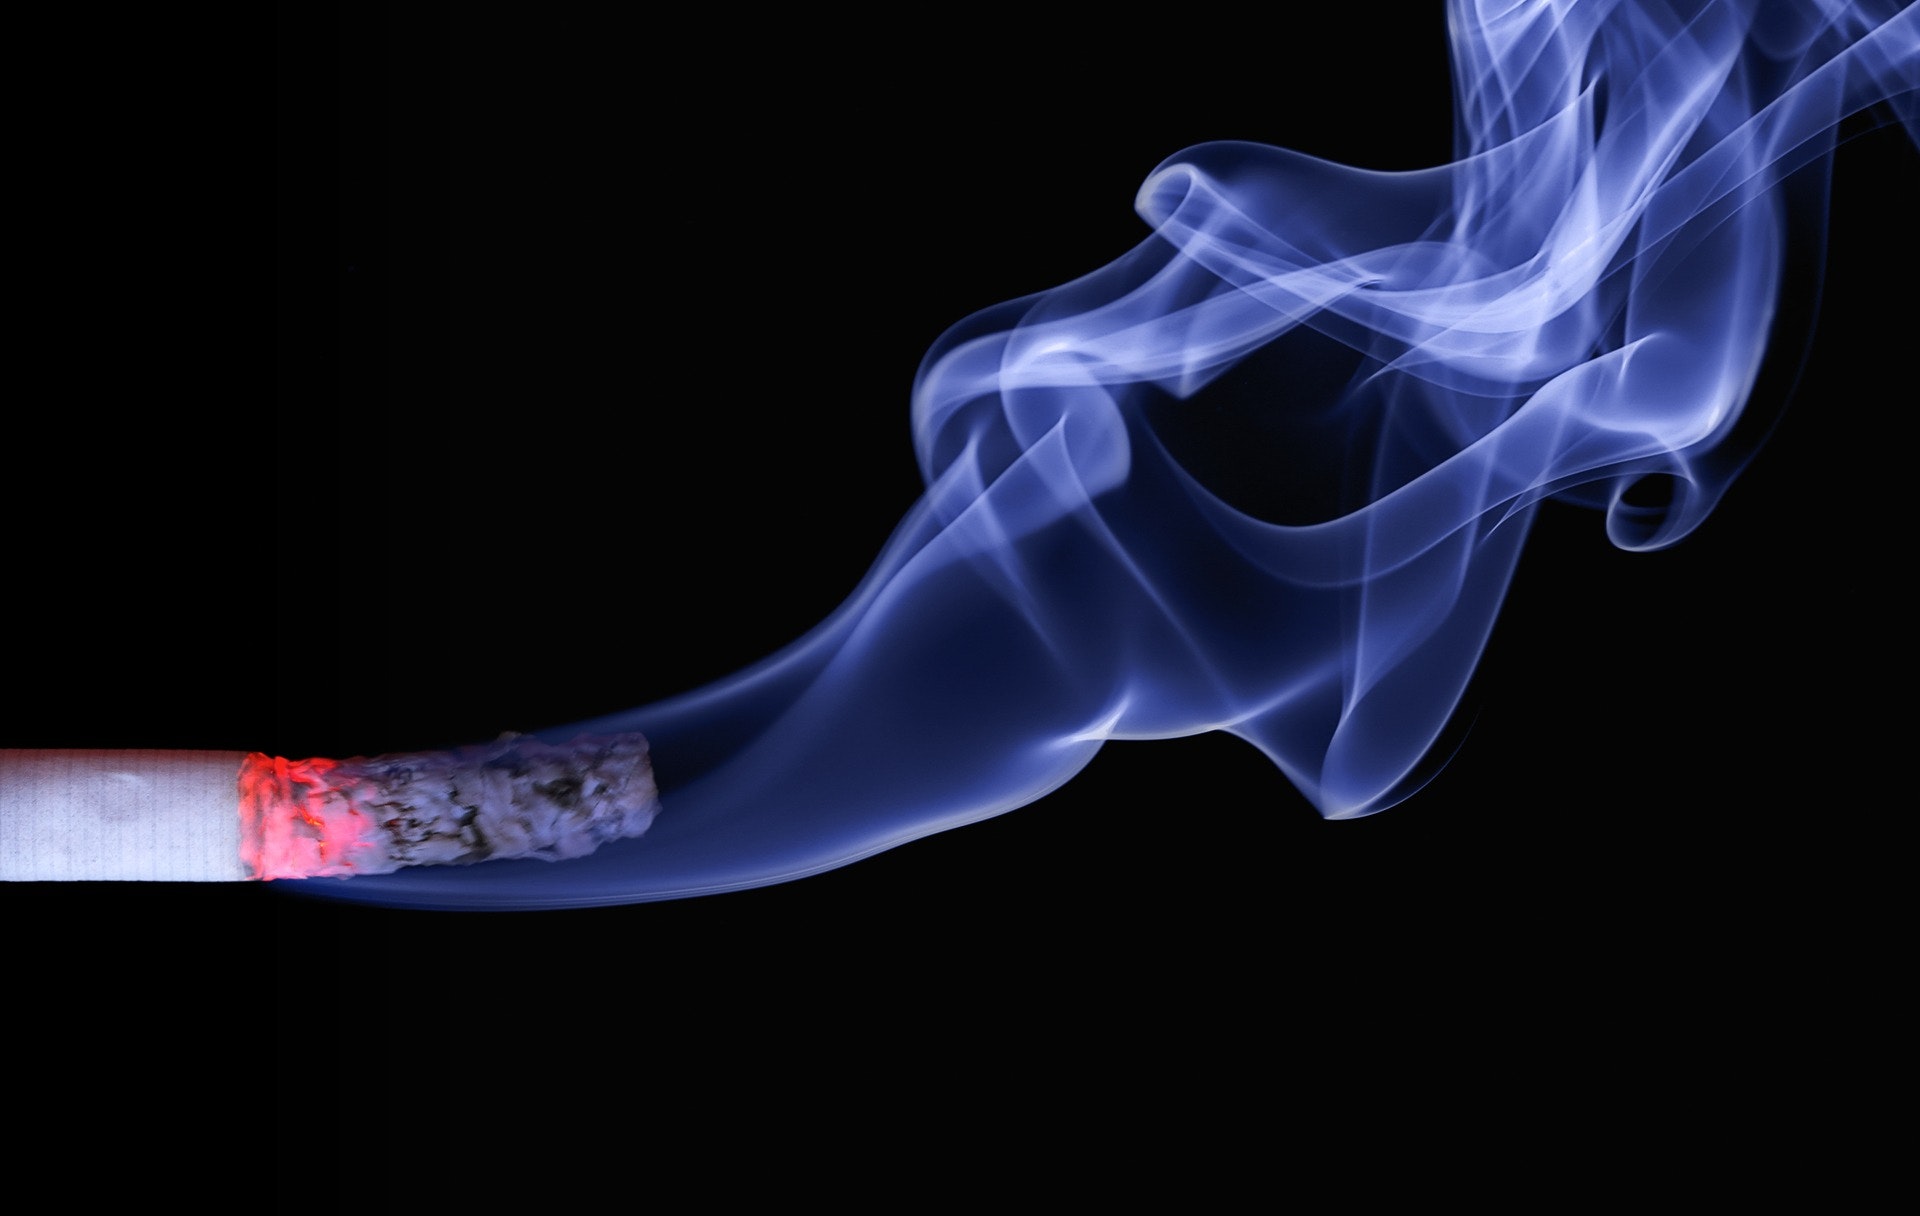 Wales Extends Smoking Ban